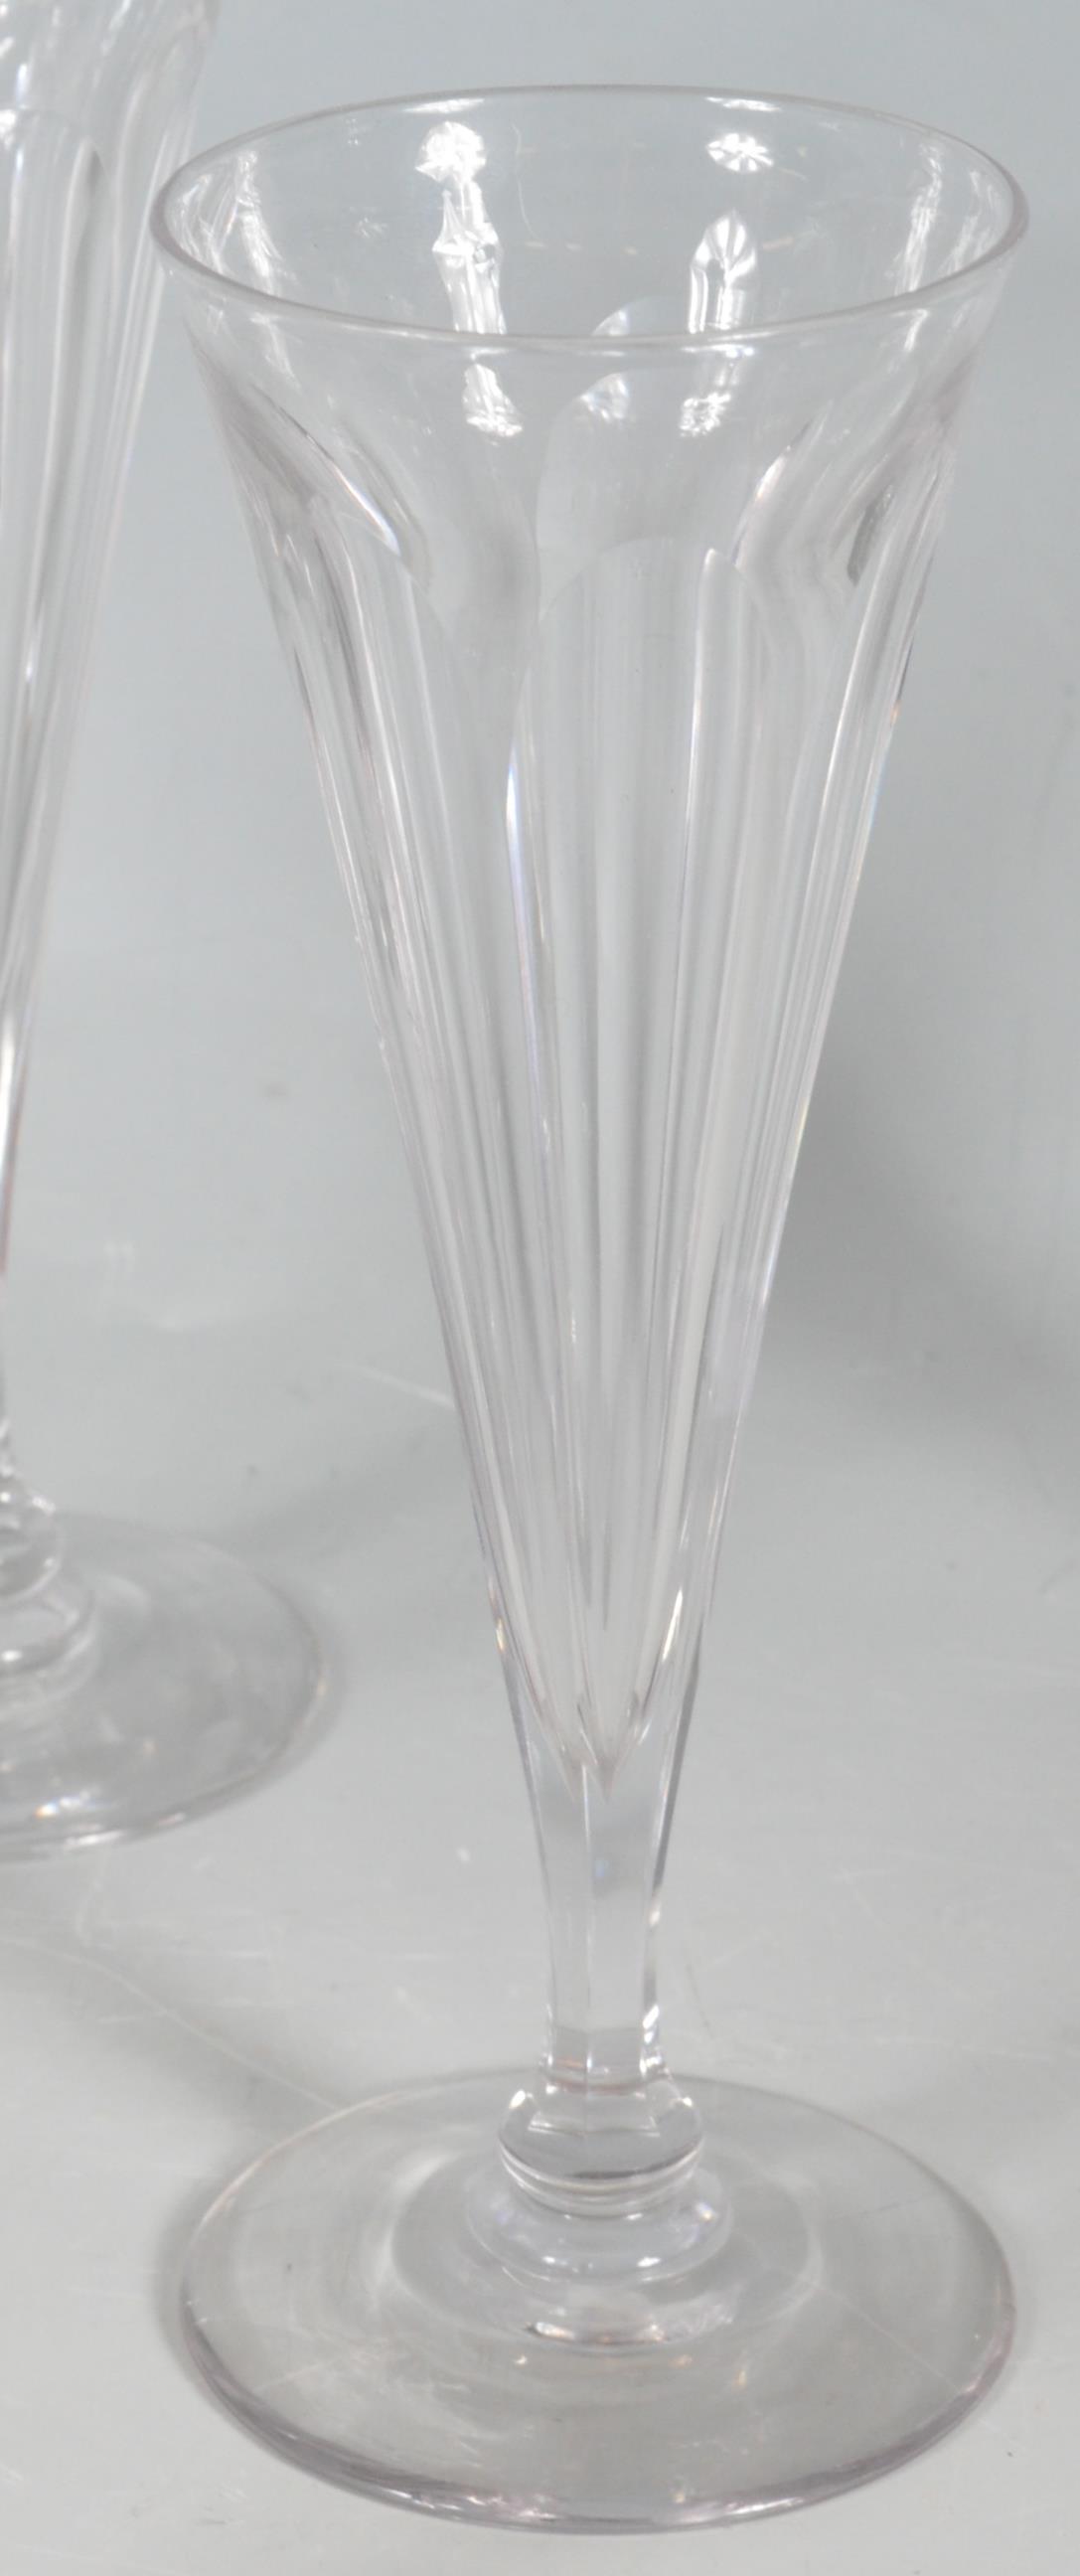 ANTIQUE SET OF SIX 19TH CENTURY GEORGIAN ALE GLASSES - Image 3 of 5